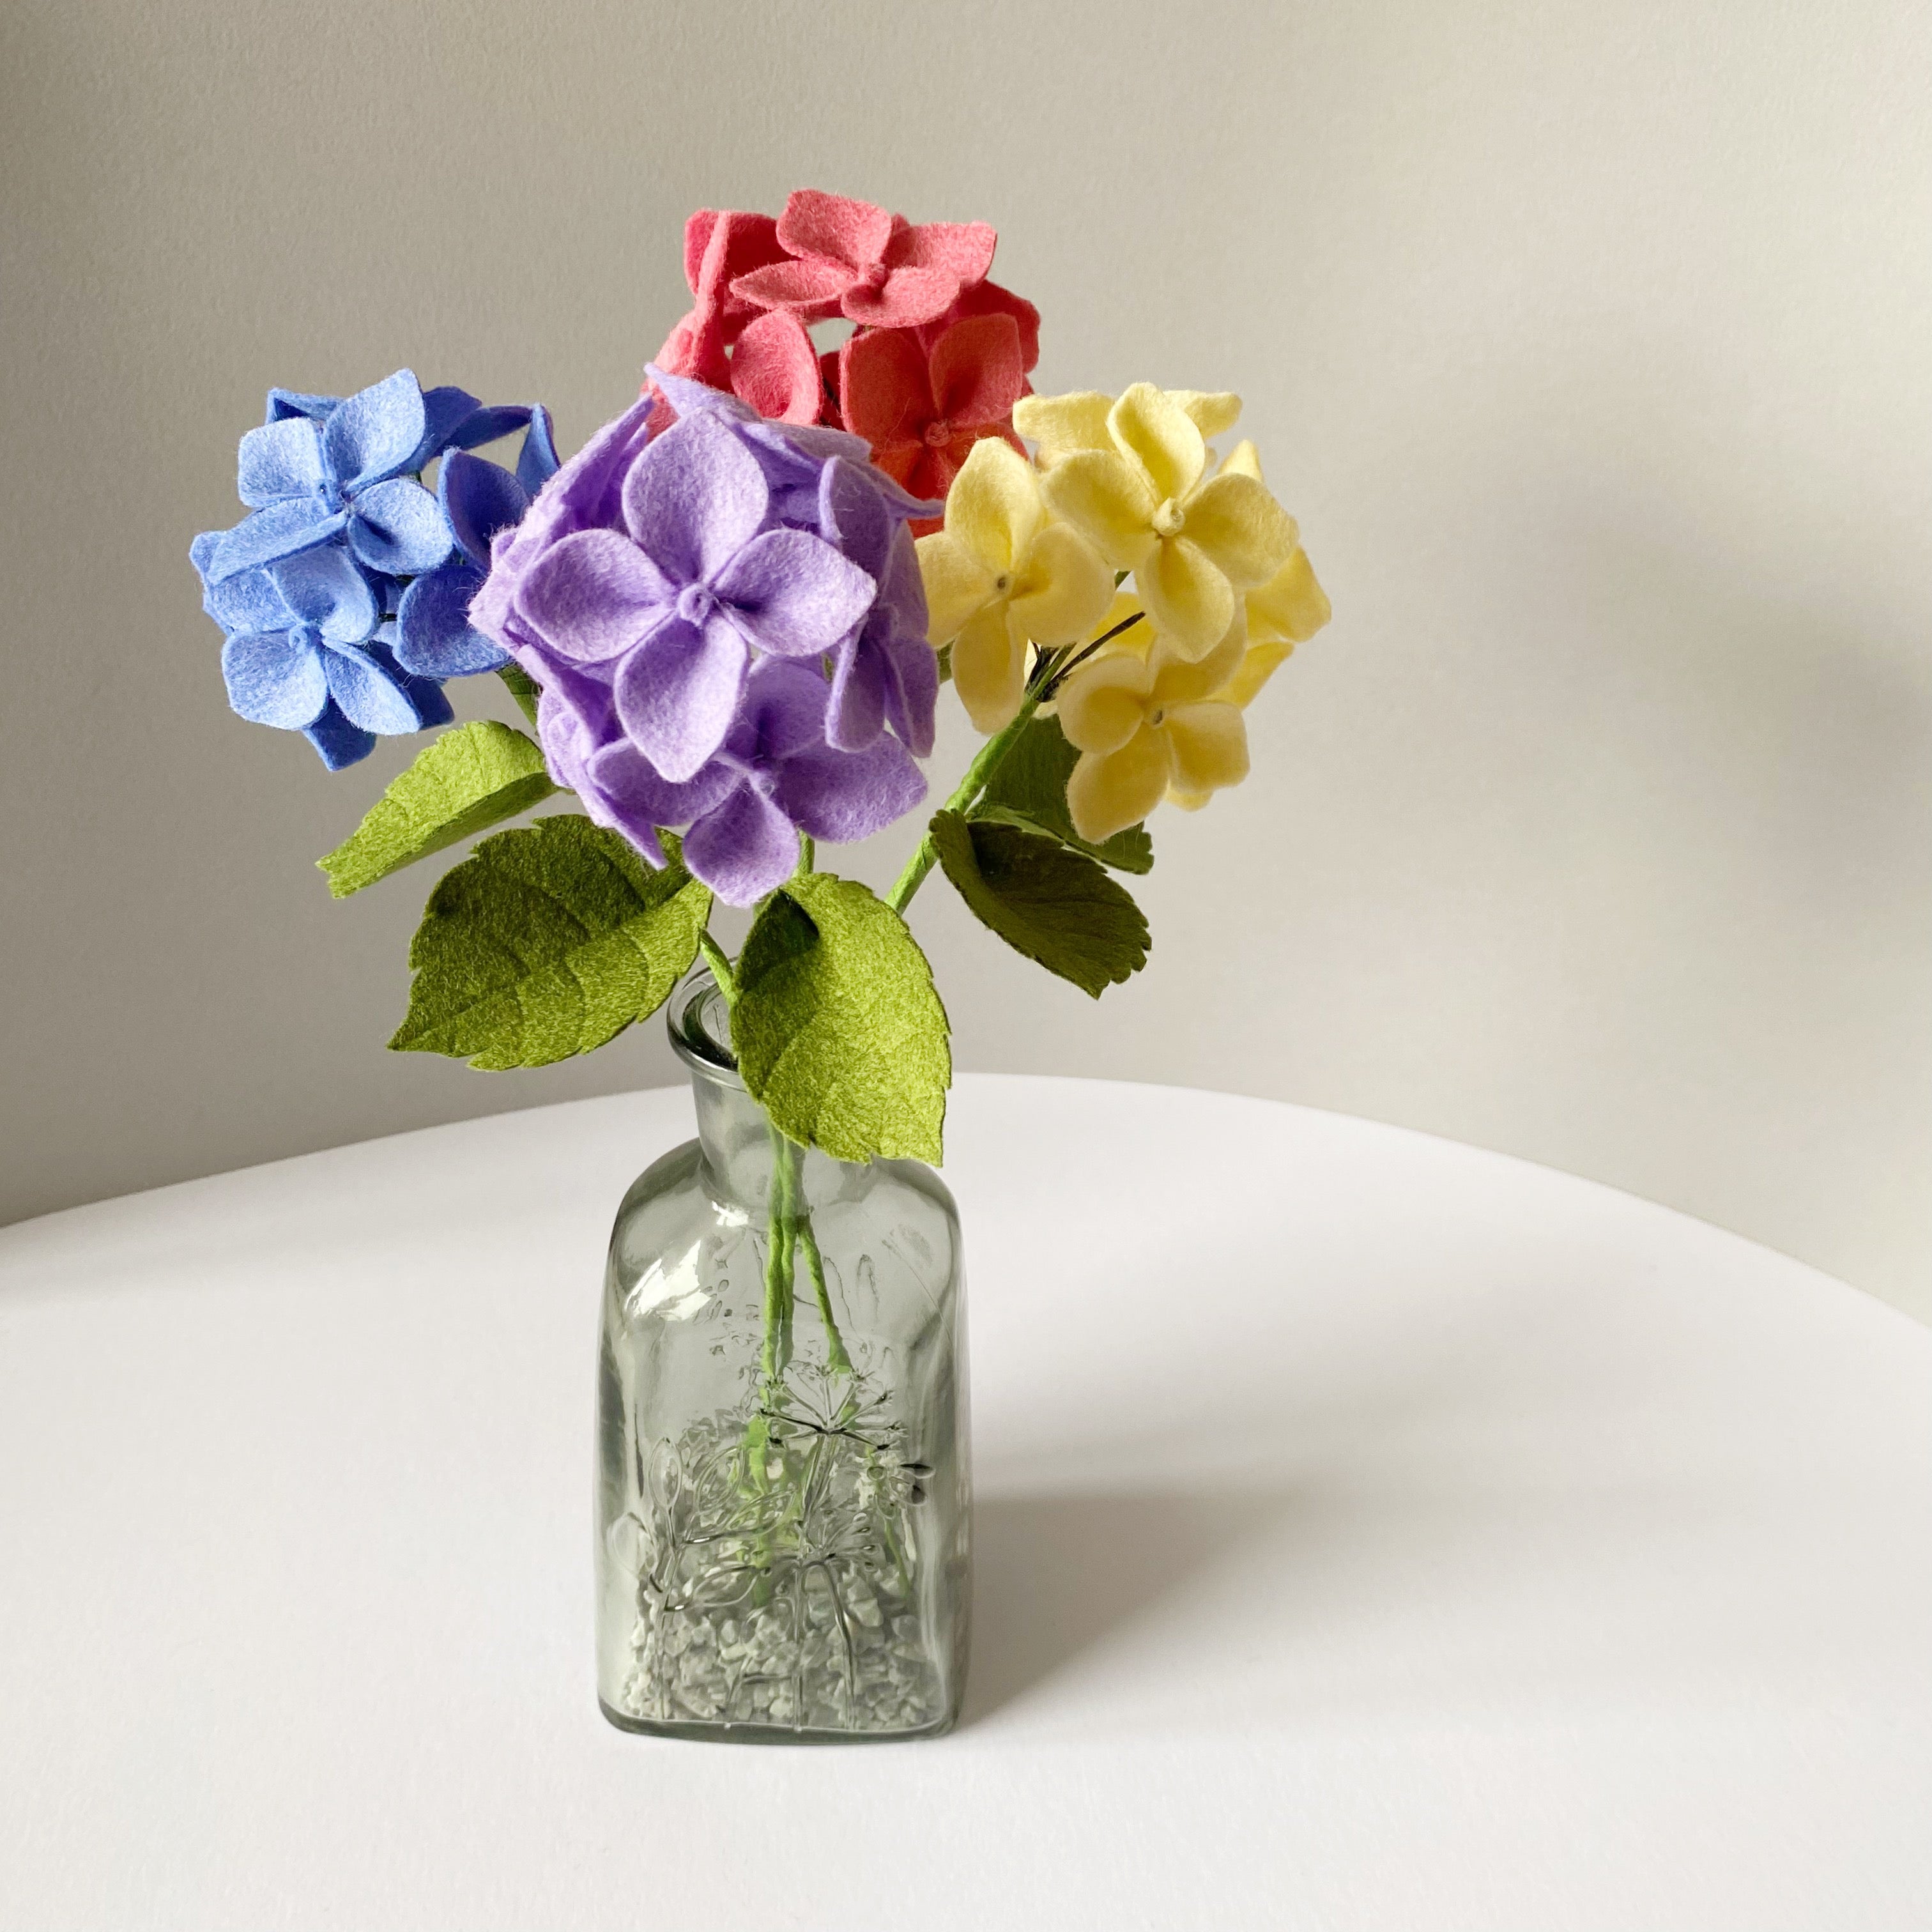 Learn to make felt hydrangea flowers with The Handmade Florist